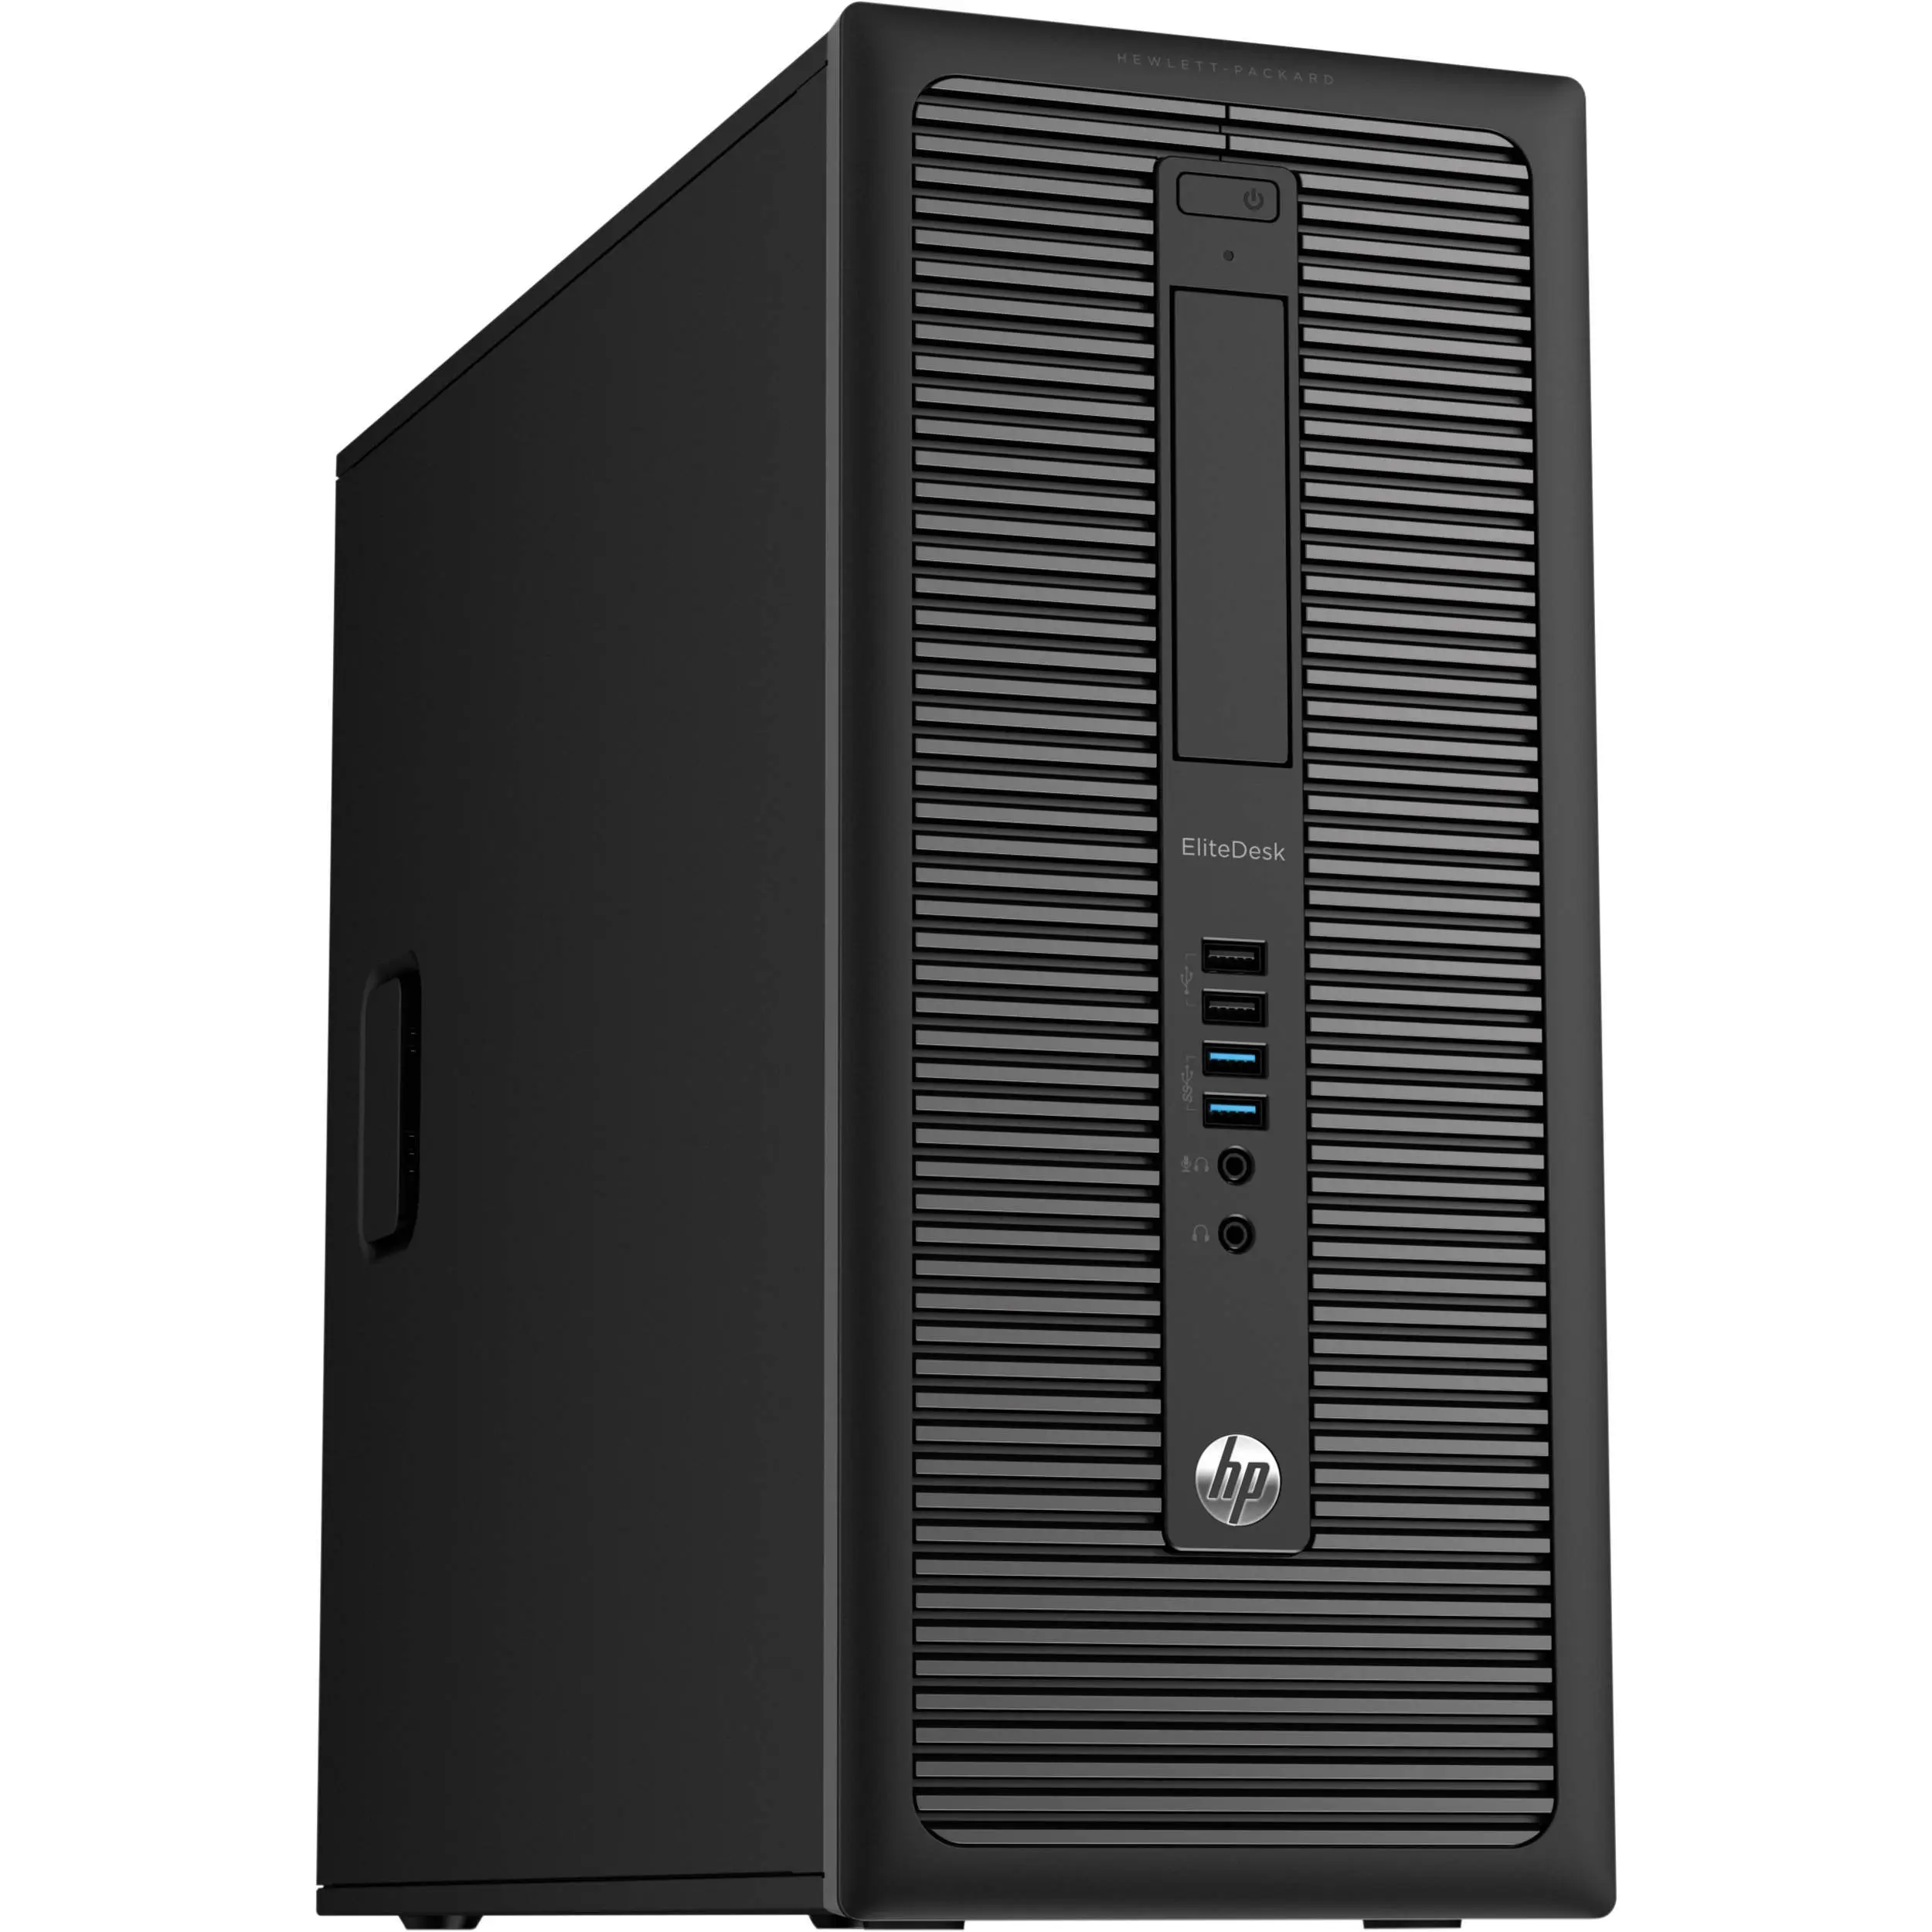 Hp elitedesk 800 g1 twr: the ultimate powerhouse desktop